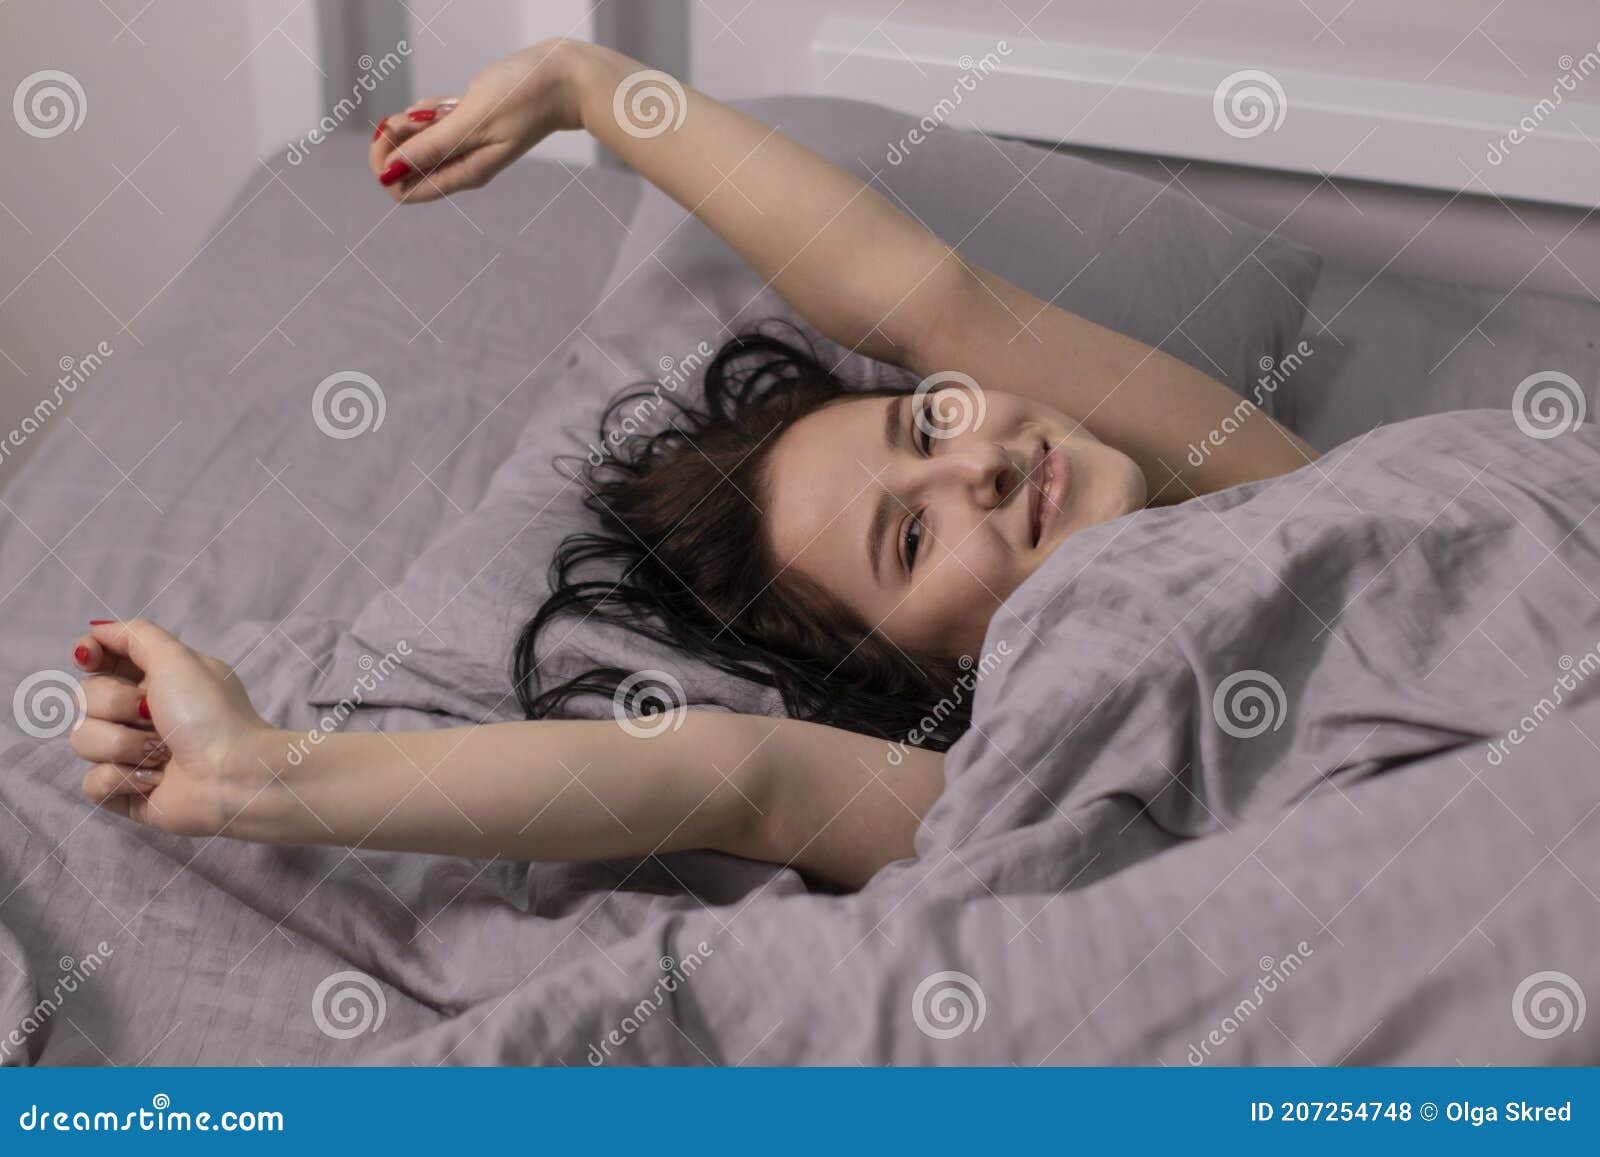 happy sleepy girl brunette in burgundy top under grey sheets in bed. morning routine. good dream, sleeping